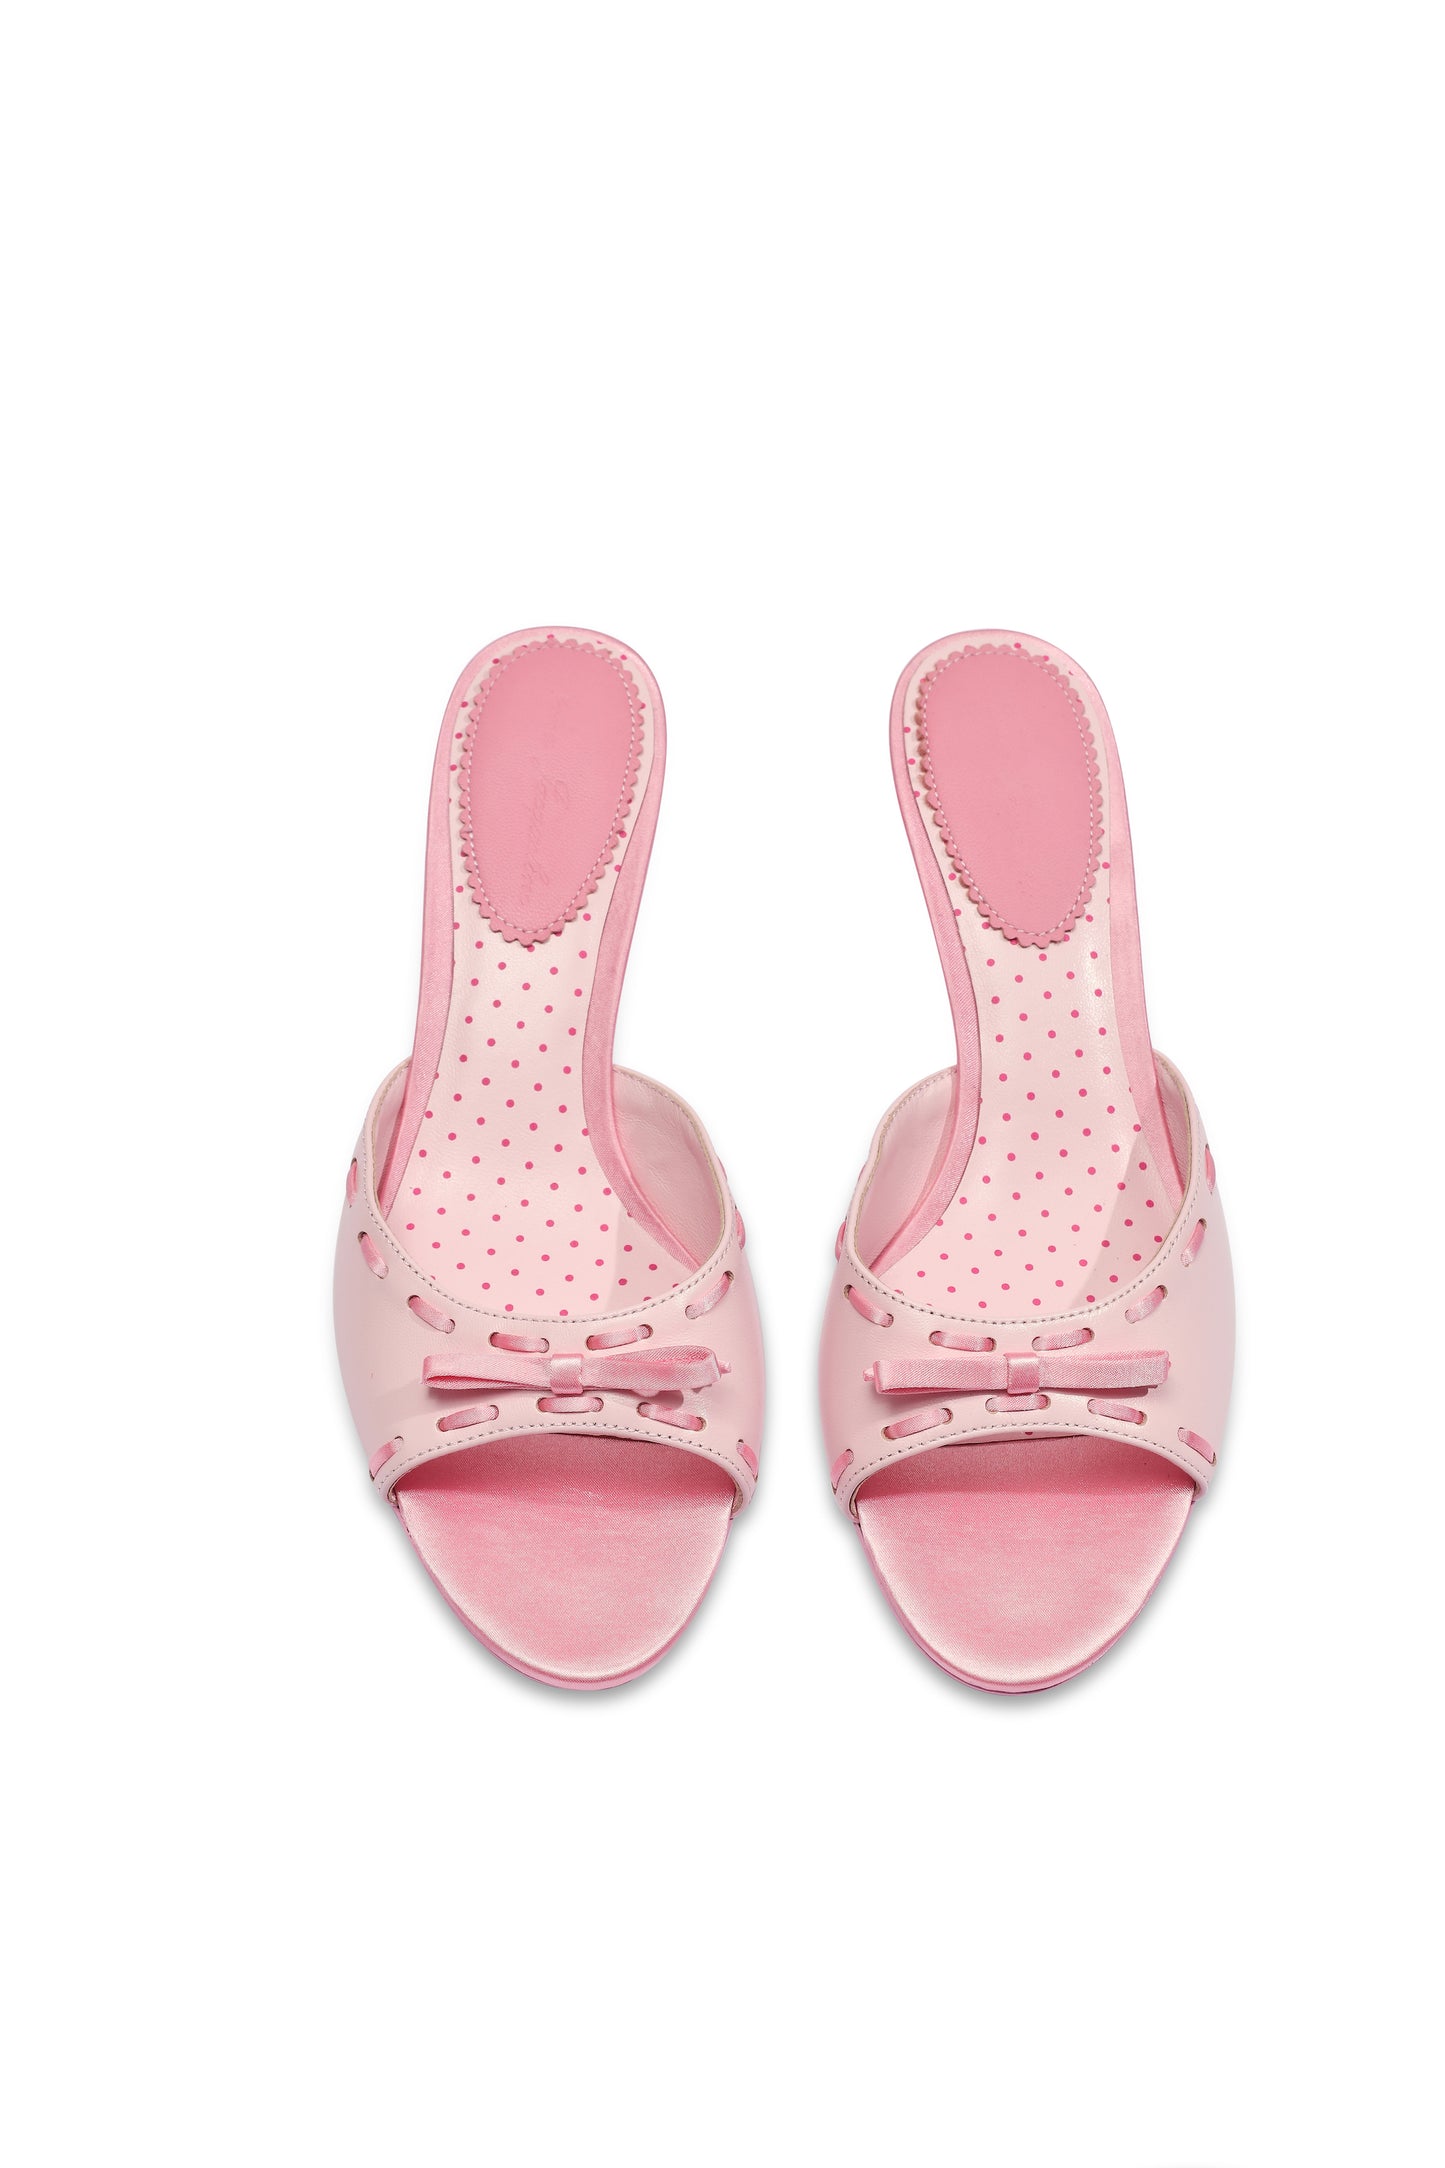 Paulina Bow Heels (Pink) (Final Sale)